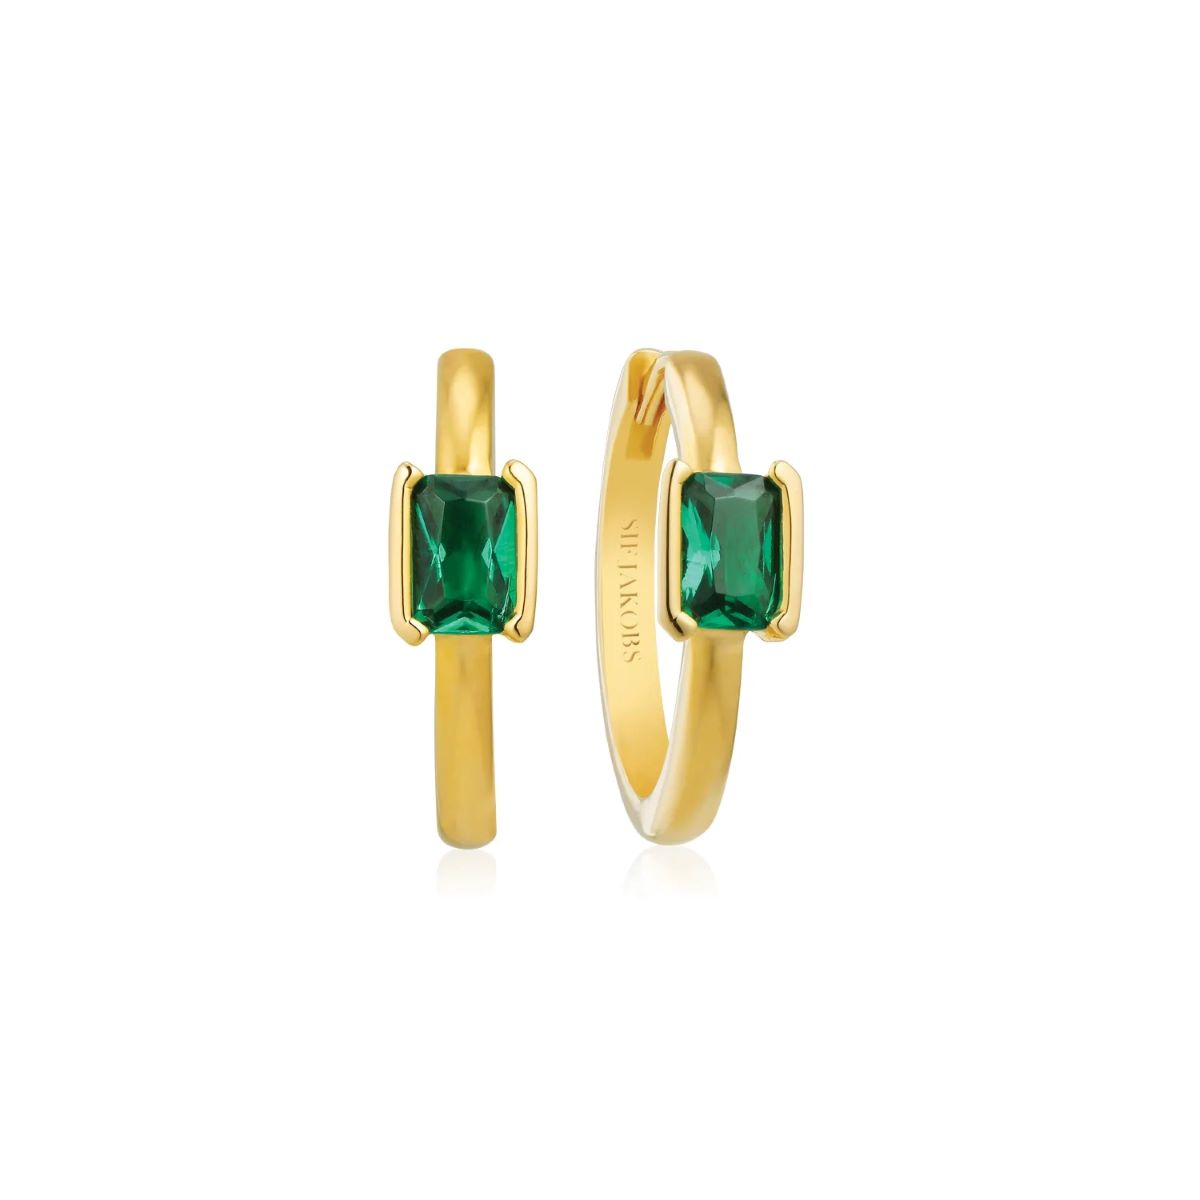 Sif Jakobs Roccanova Uno Earrings - Gold Plated with Green Zirconia